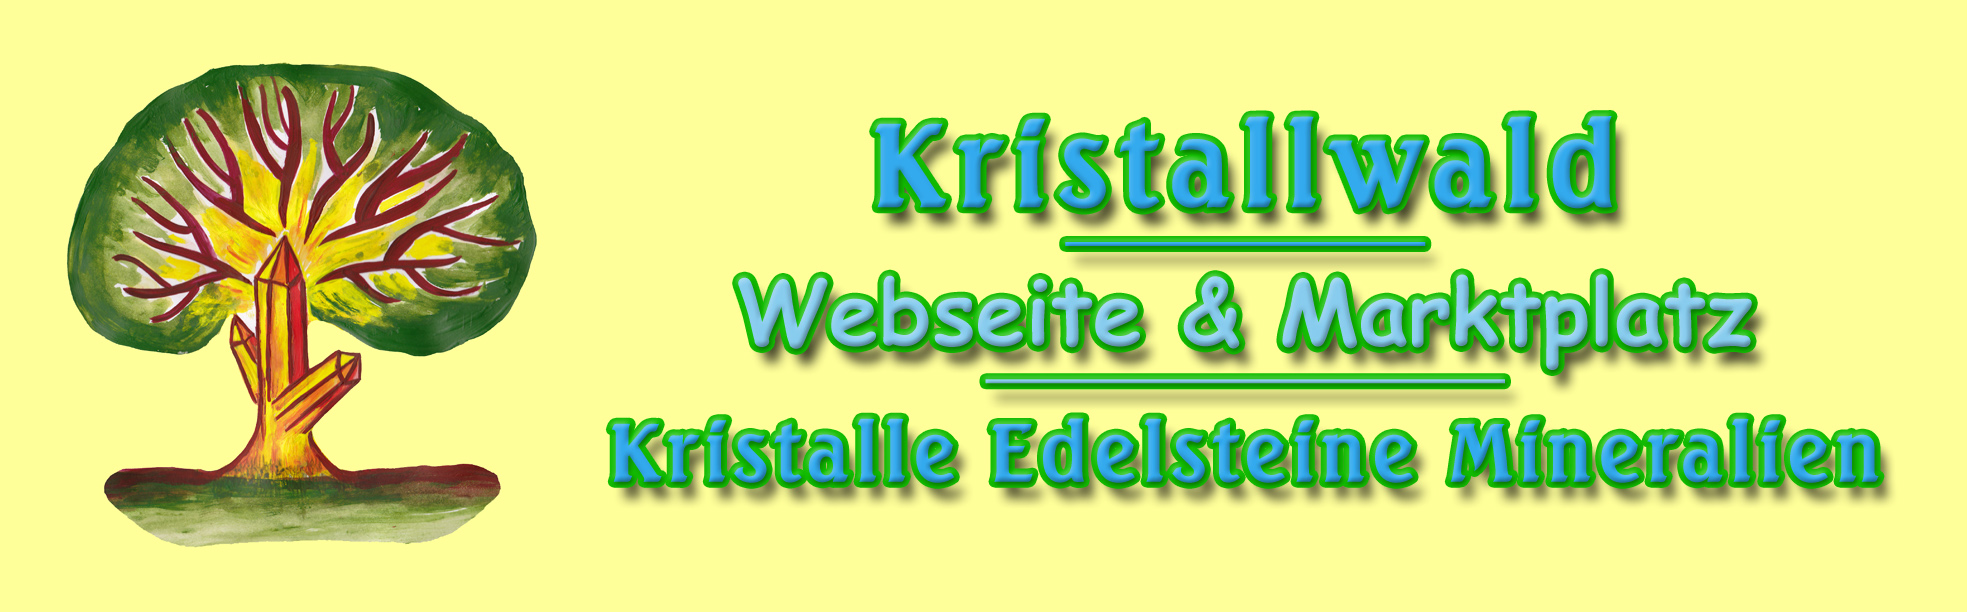 Kristallwald